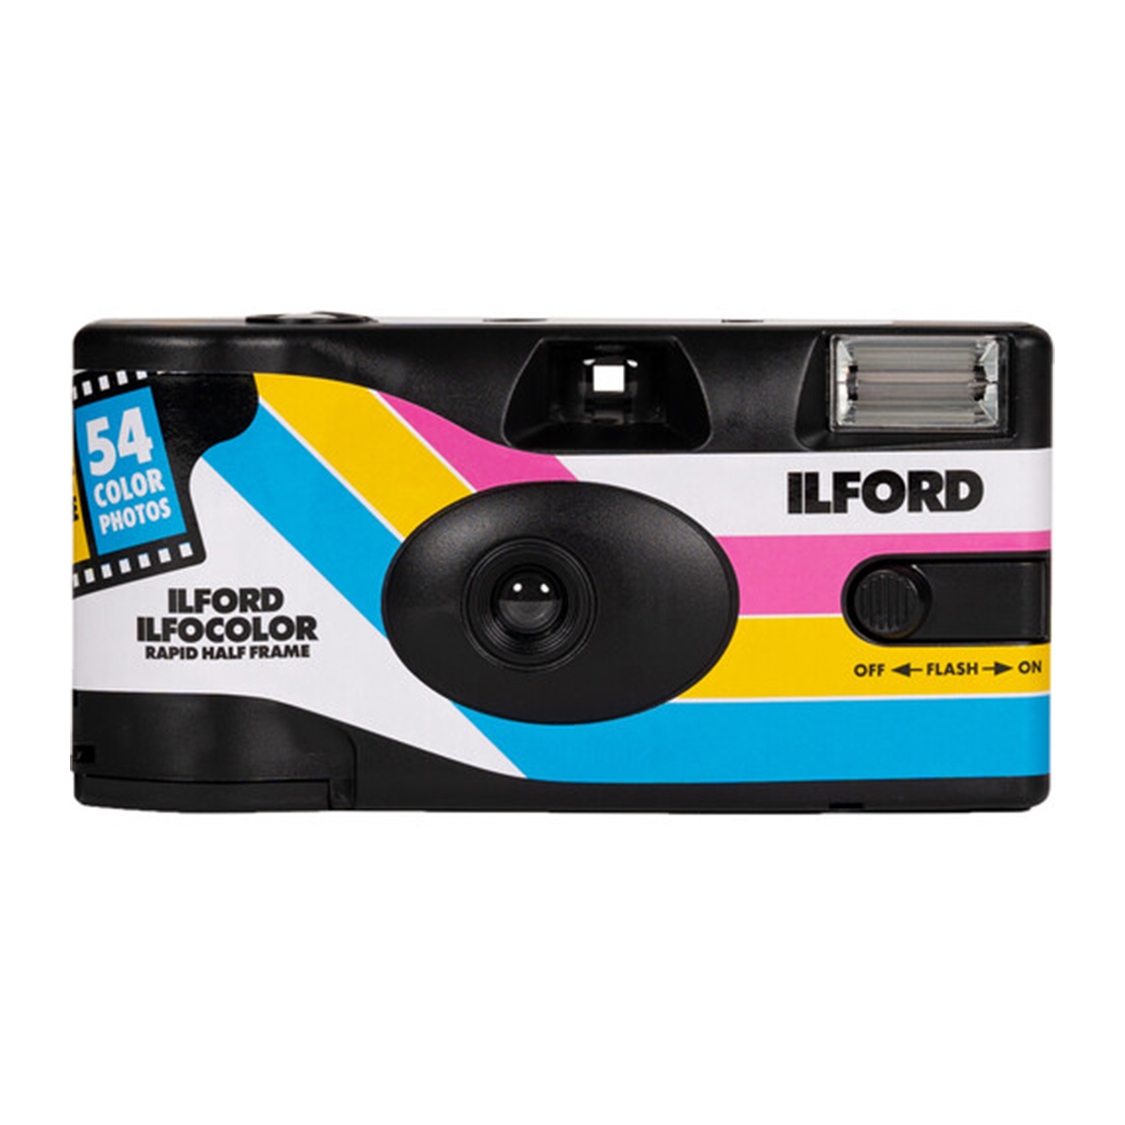 Ilford Ilfocolor Half Frame Single Use Film Camera ISO 400 (54exp)